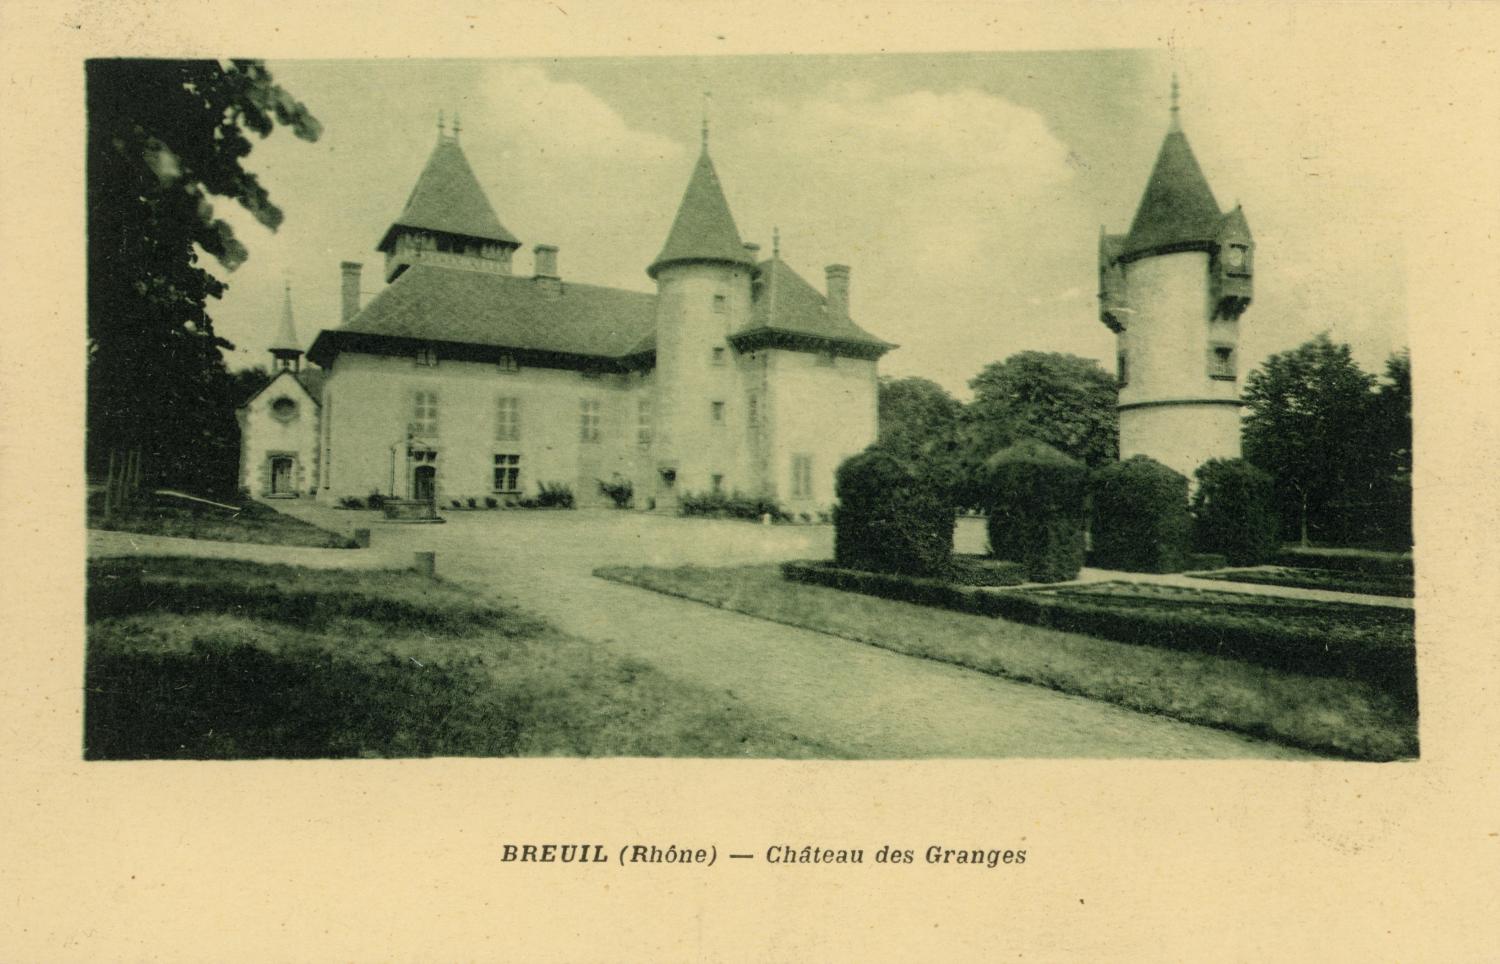 Breuil (Rhône). - Château des Granges